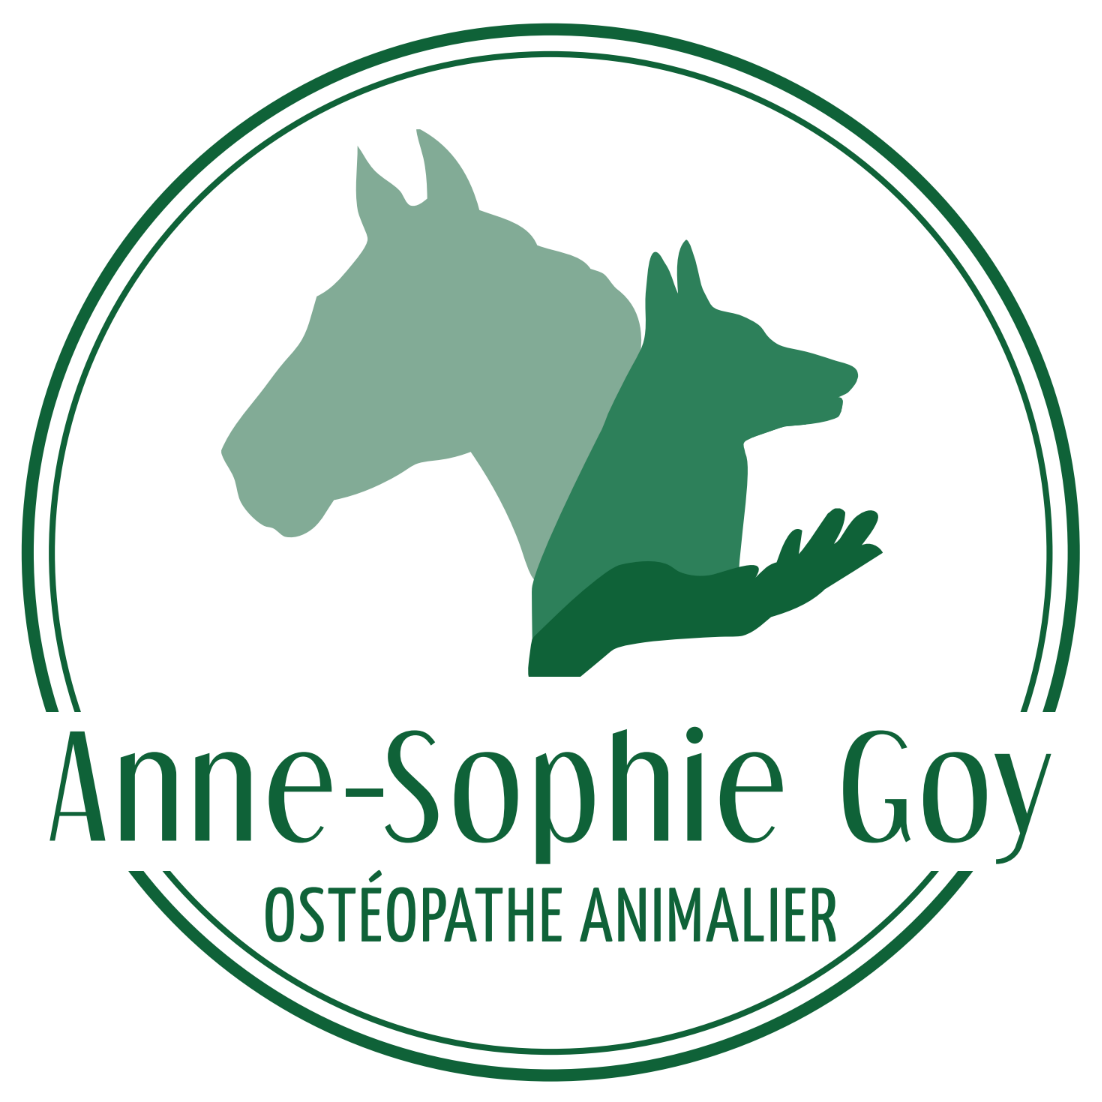 Anne-Sophie Goy - Ostéopathe animalier